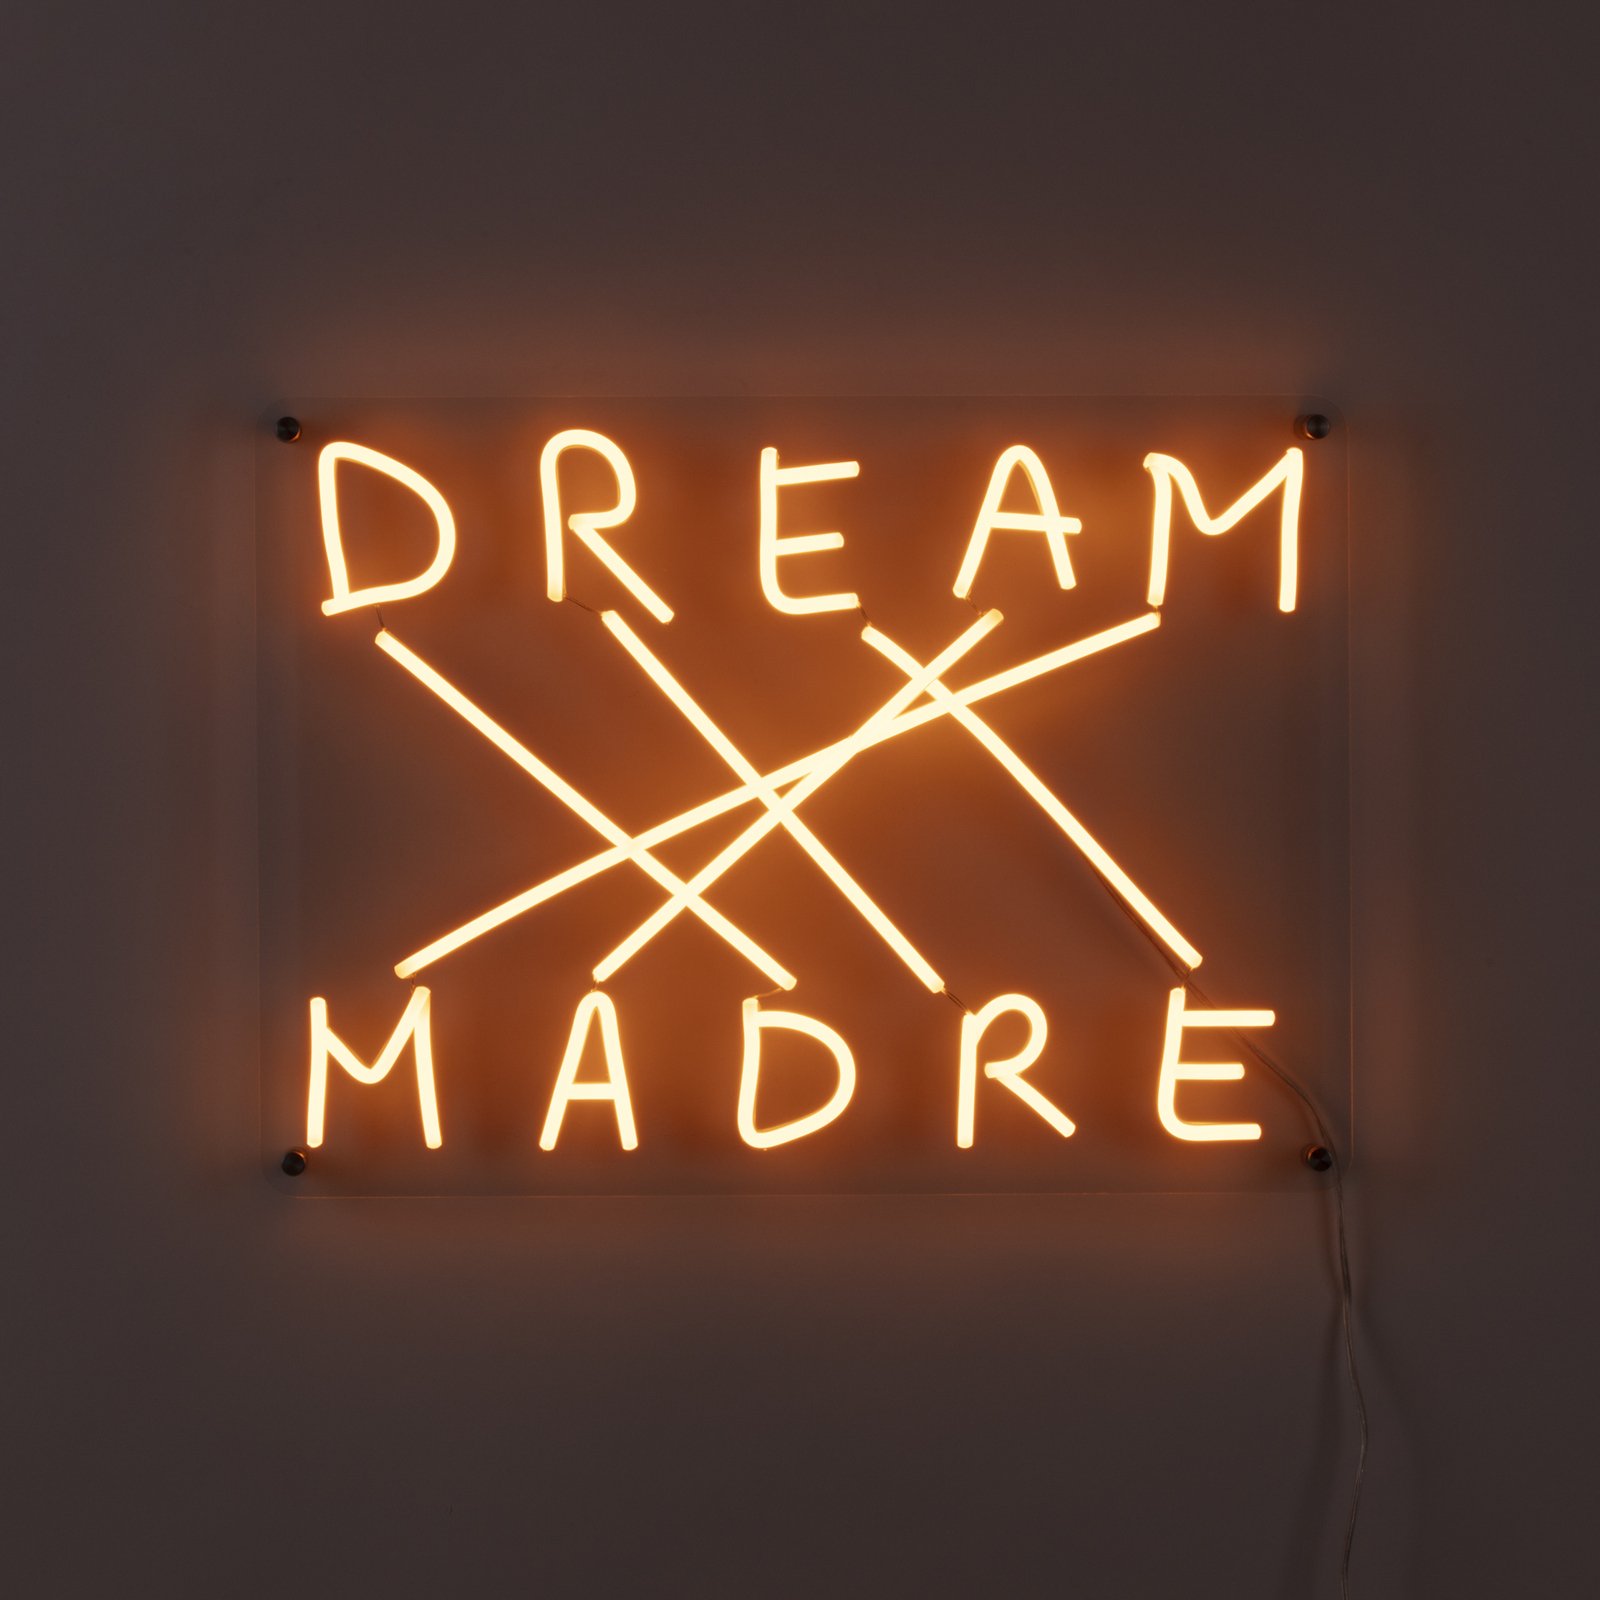 LED decoratie-wandlamp Dream-Madre, geel